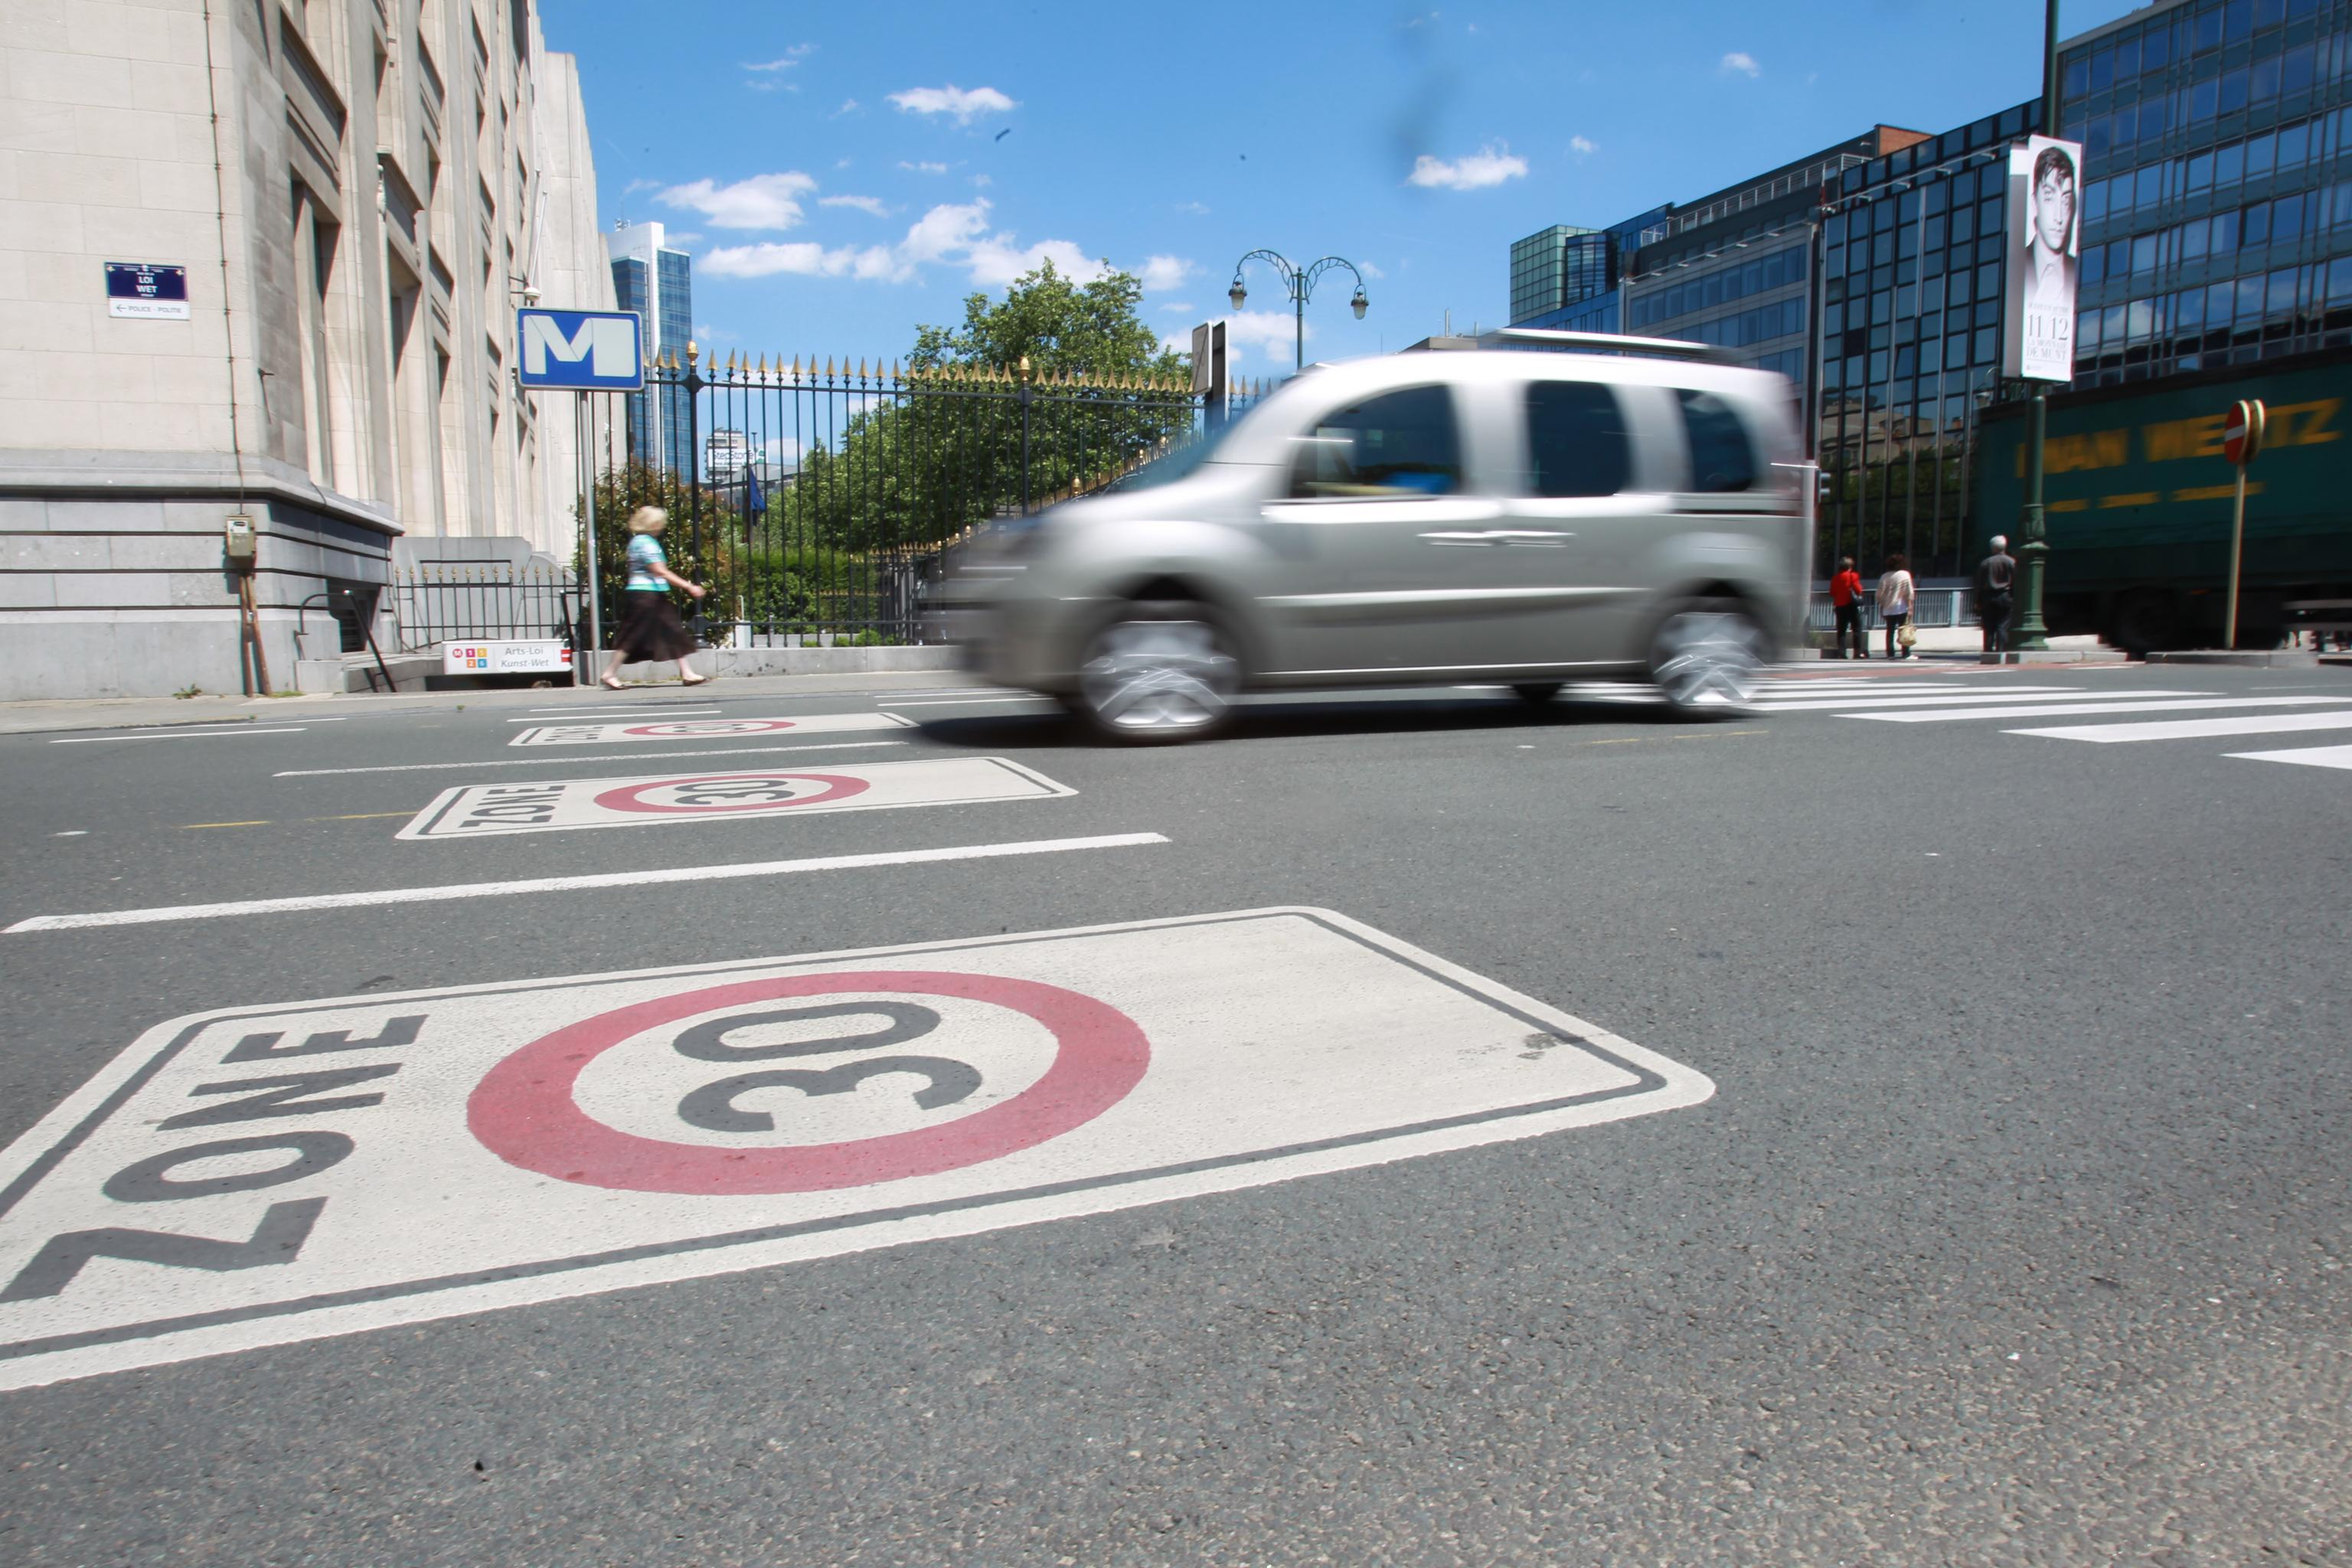 Zone 30 in Brussel: lagere snelheden en minder ernstige ongevallen